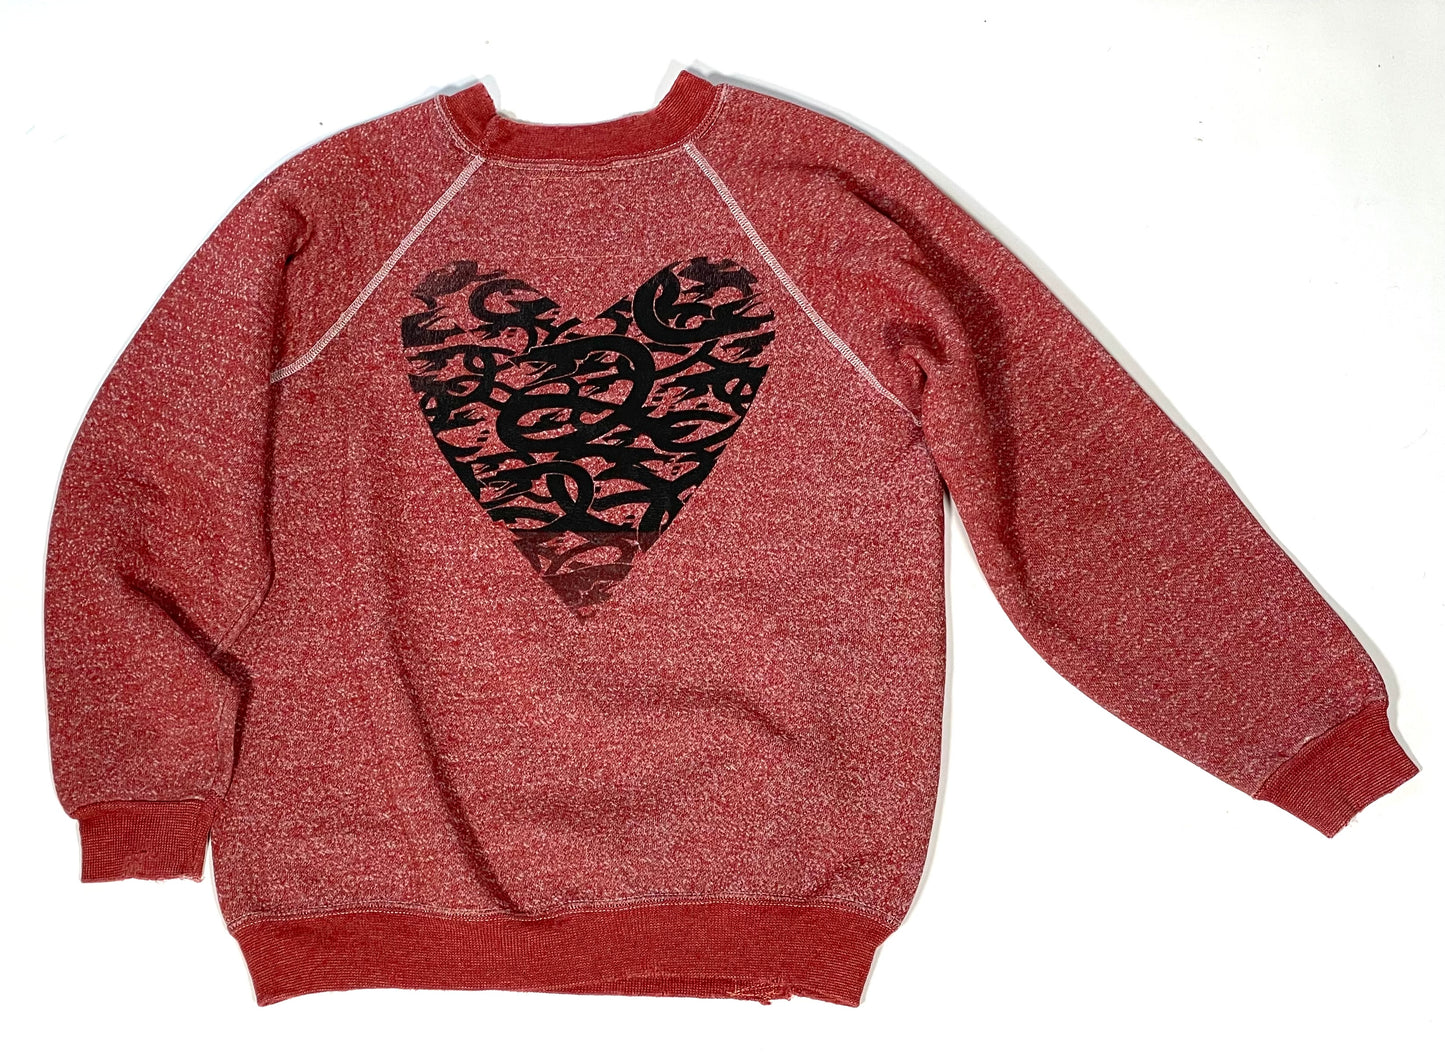 1990s 50% Cotton/Polyester Heather sweatshirt